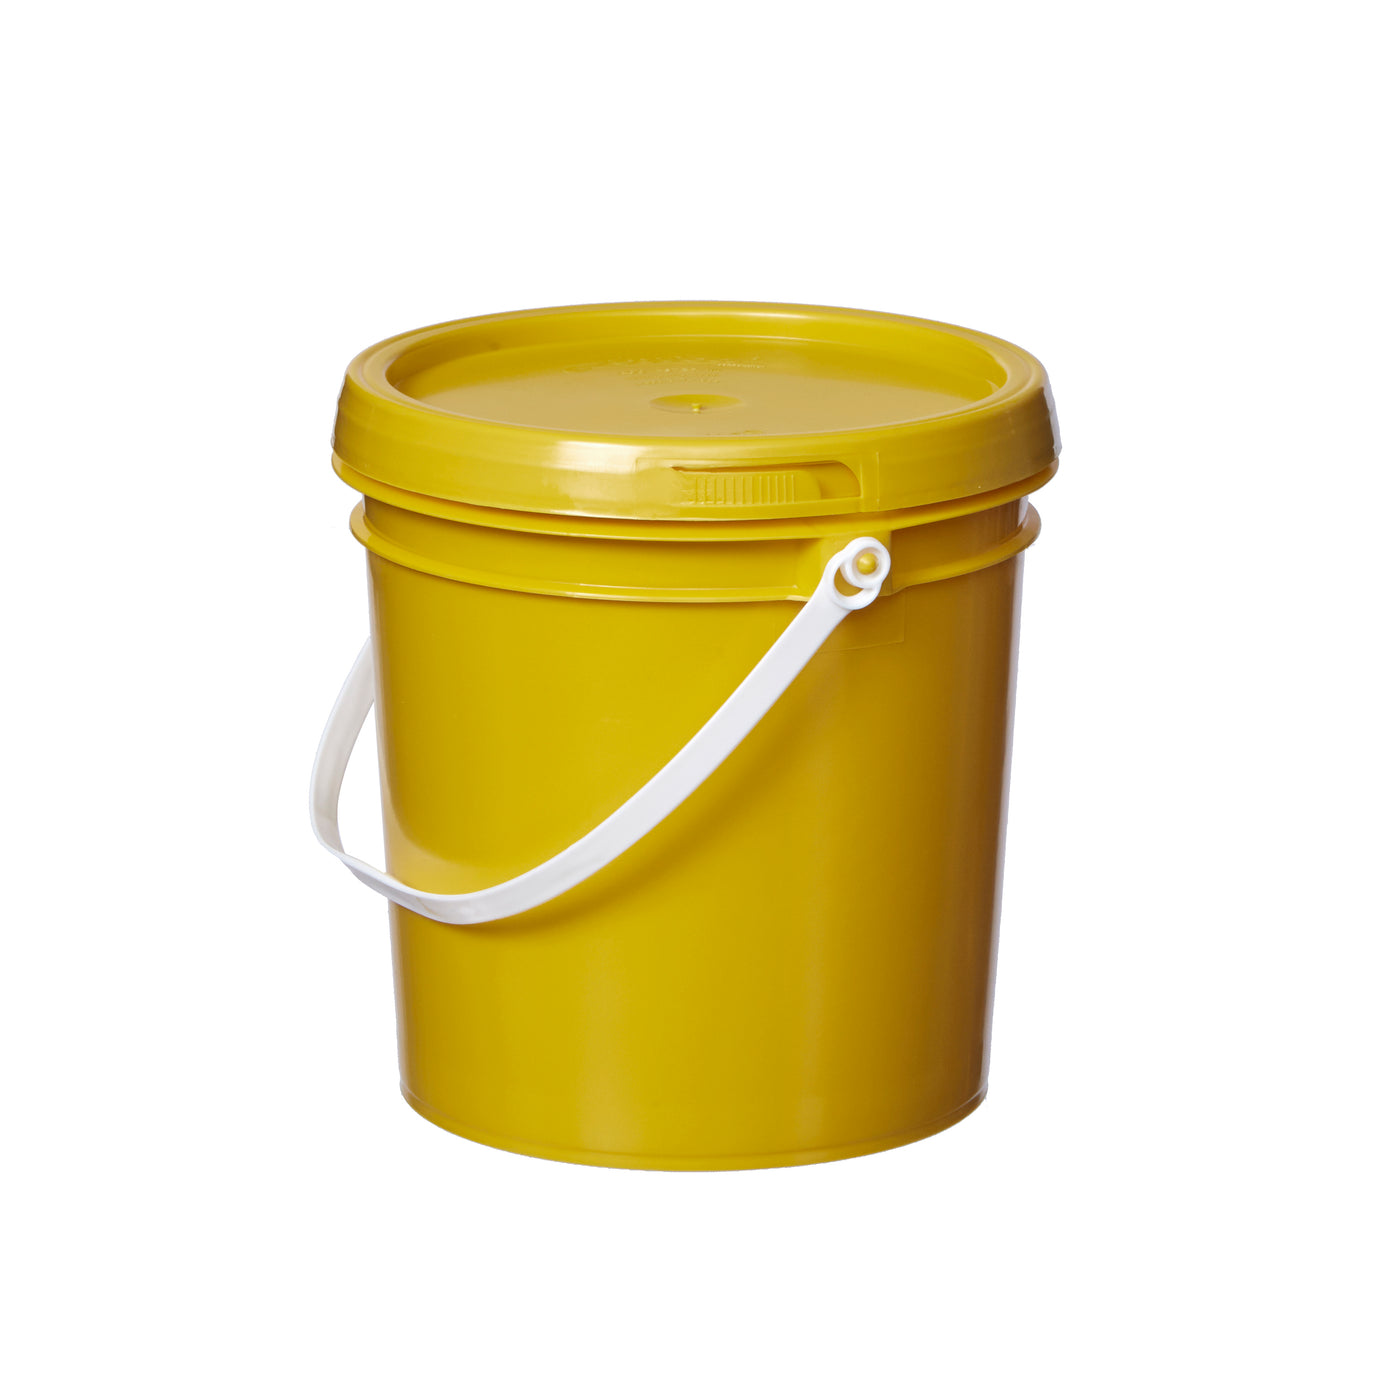 1 Gallon Pails - Plastic Handle # Pail Only, Yellow